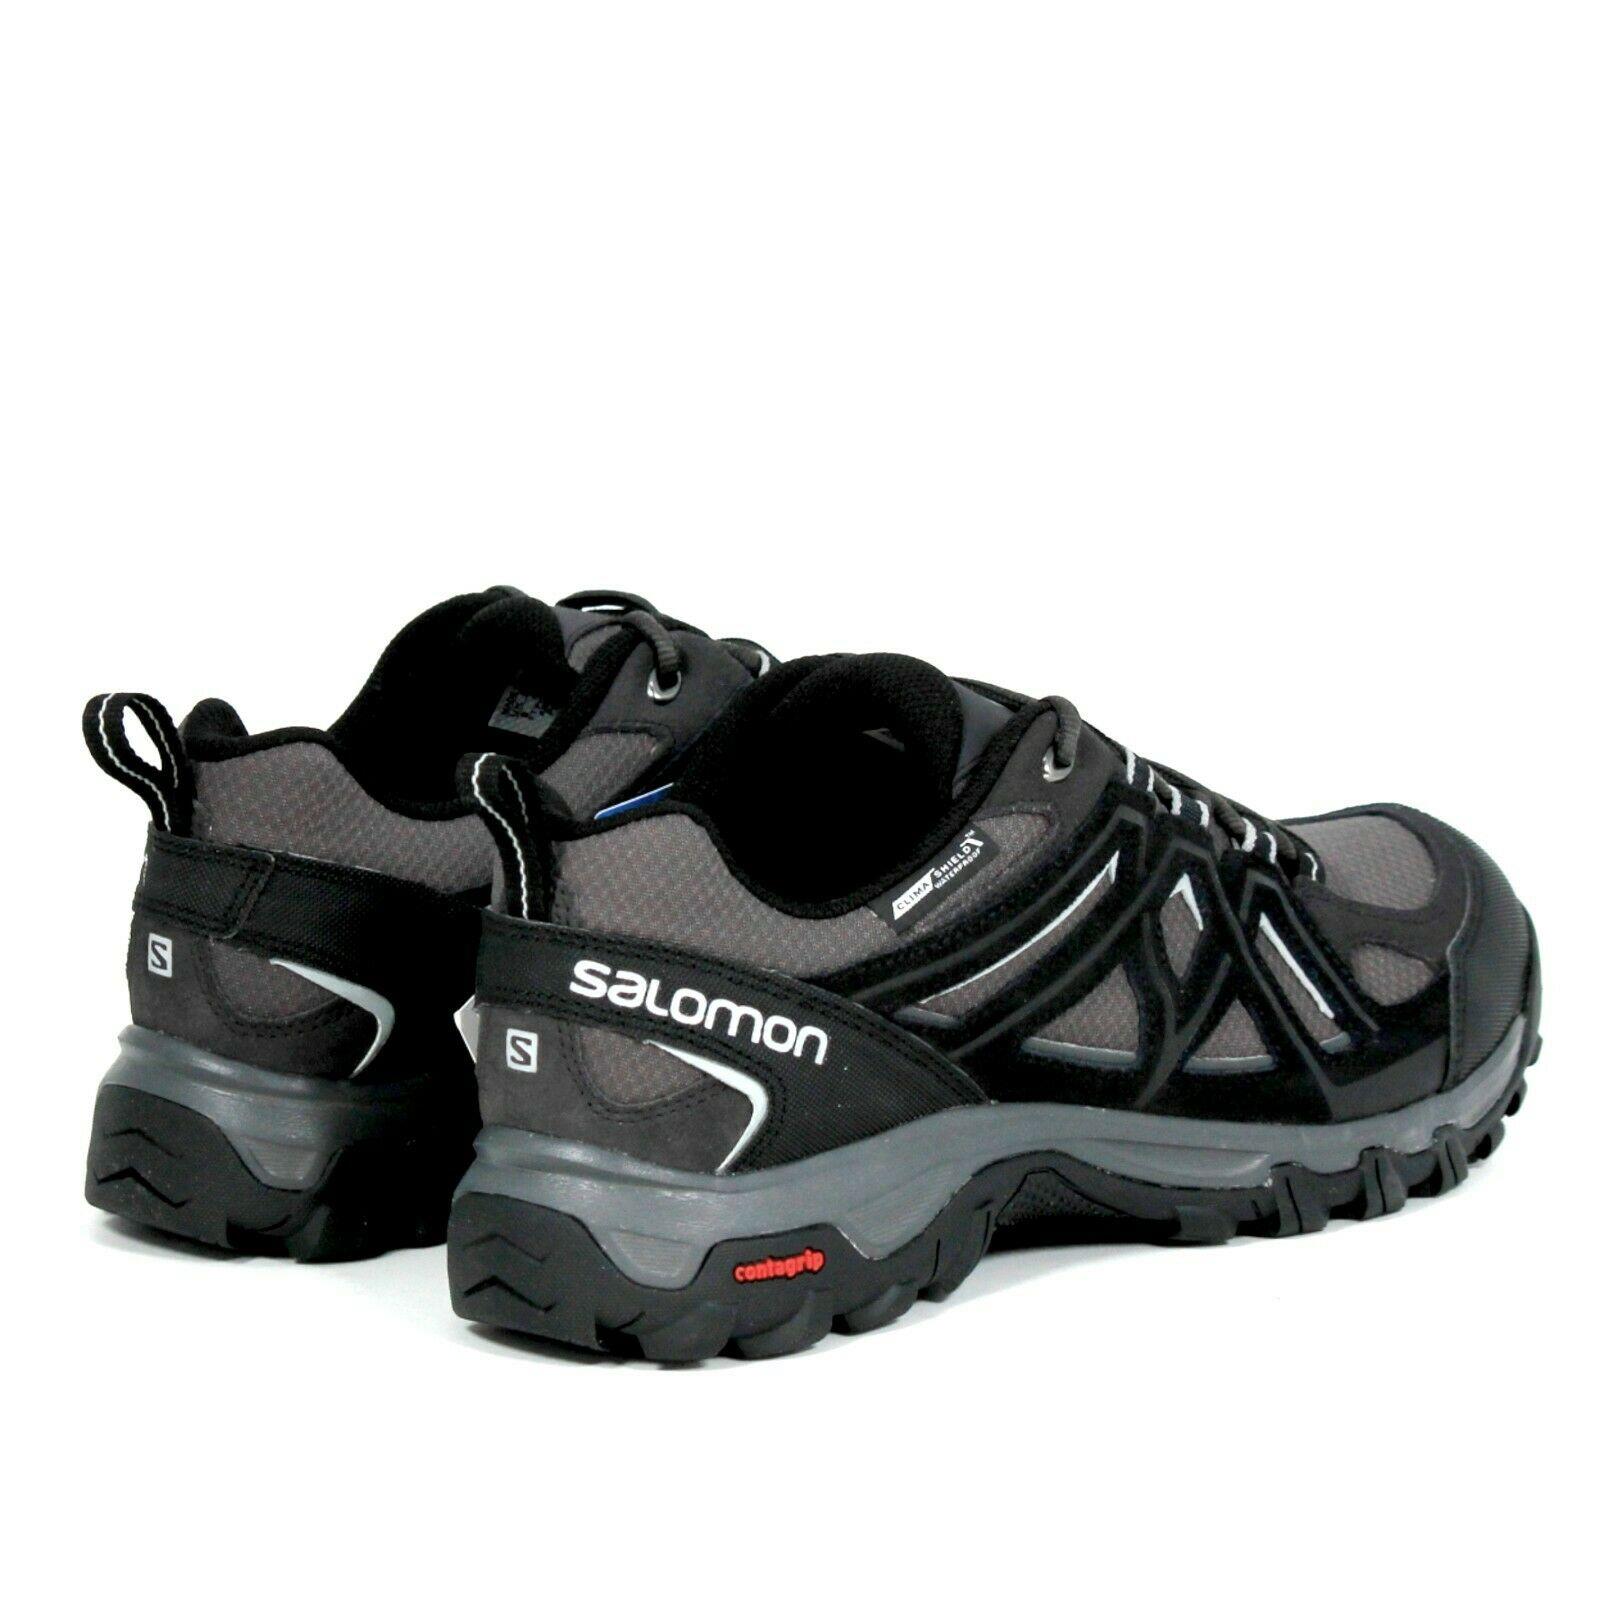 Salomon Evasion 2 CS WP khaki Men's hiking trekking shoes waterproof NEW 